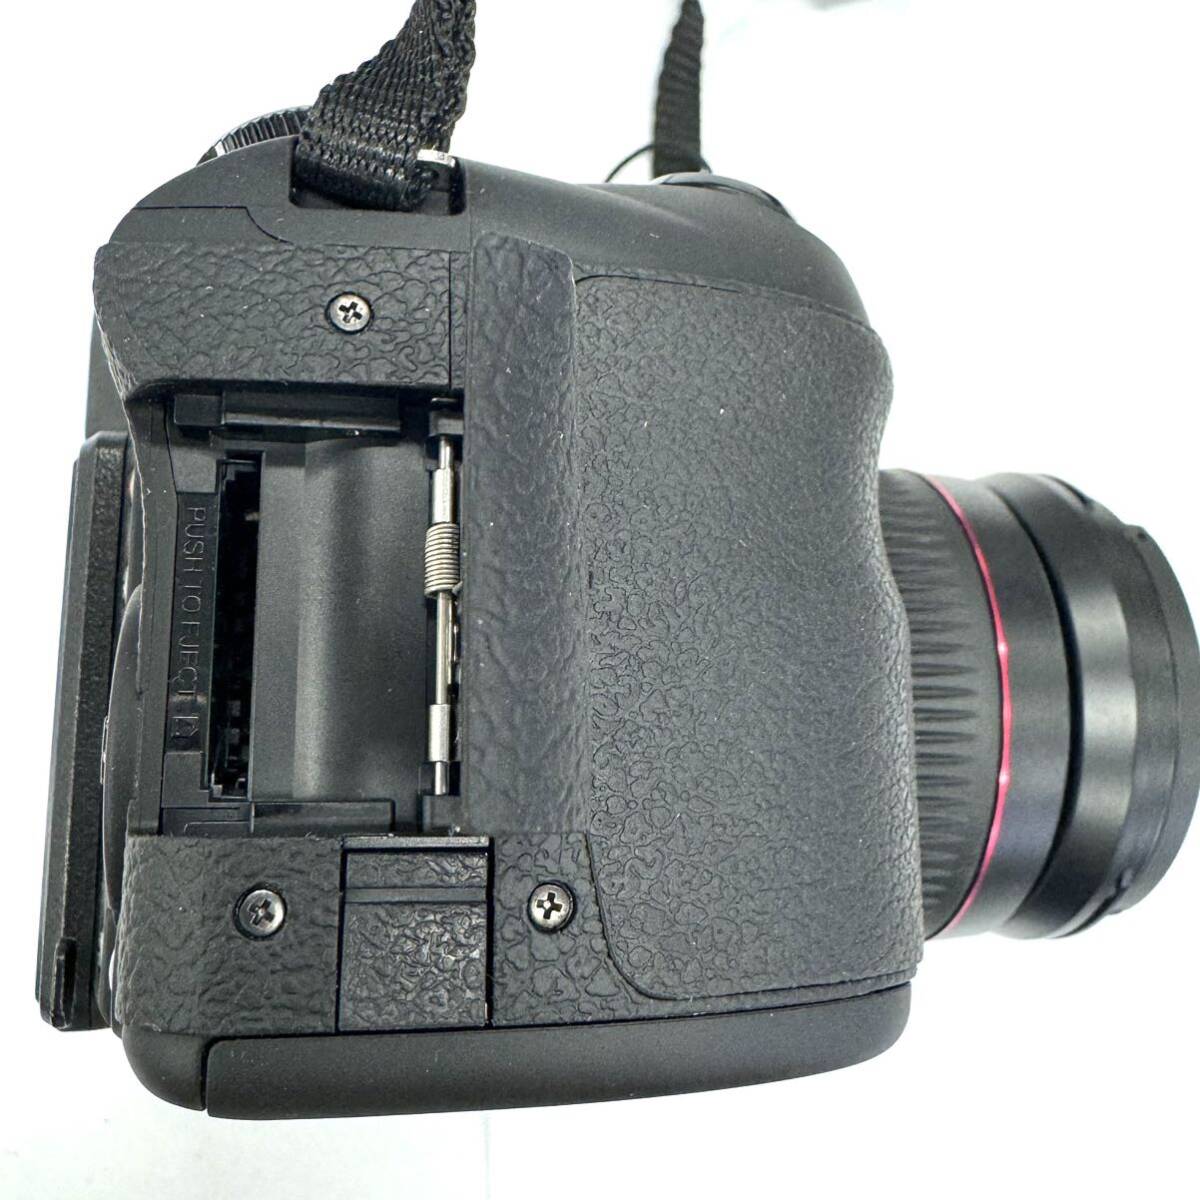 A0008 カメラ デジタルカメラ FUJIFILM 1A001459 SUPER EBC FUJINON LENS 30×ZOOM f＝4.2-126 1:2:8-5.6 58mm ジャンク品 訳あり 中古の画像6